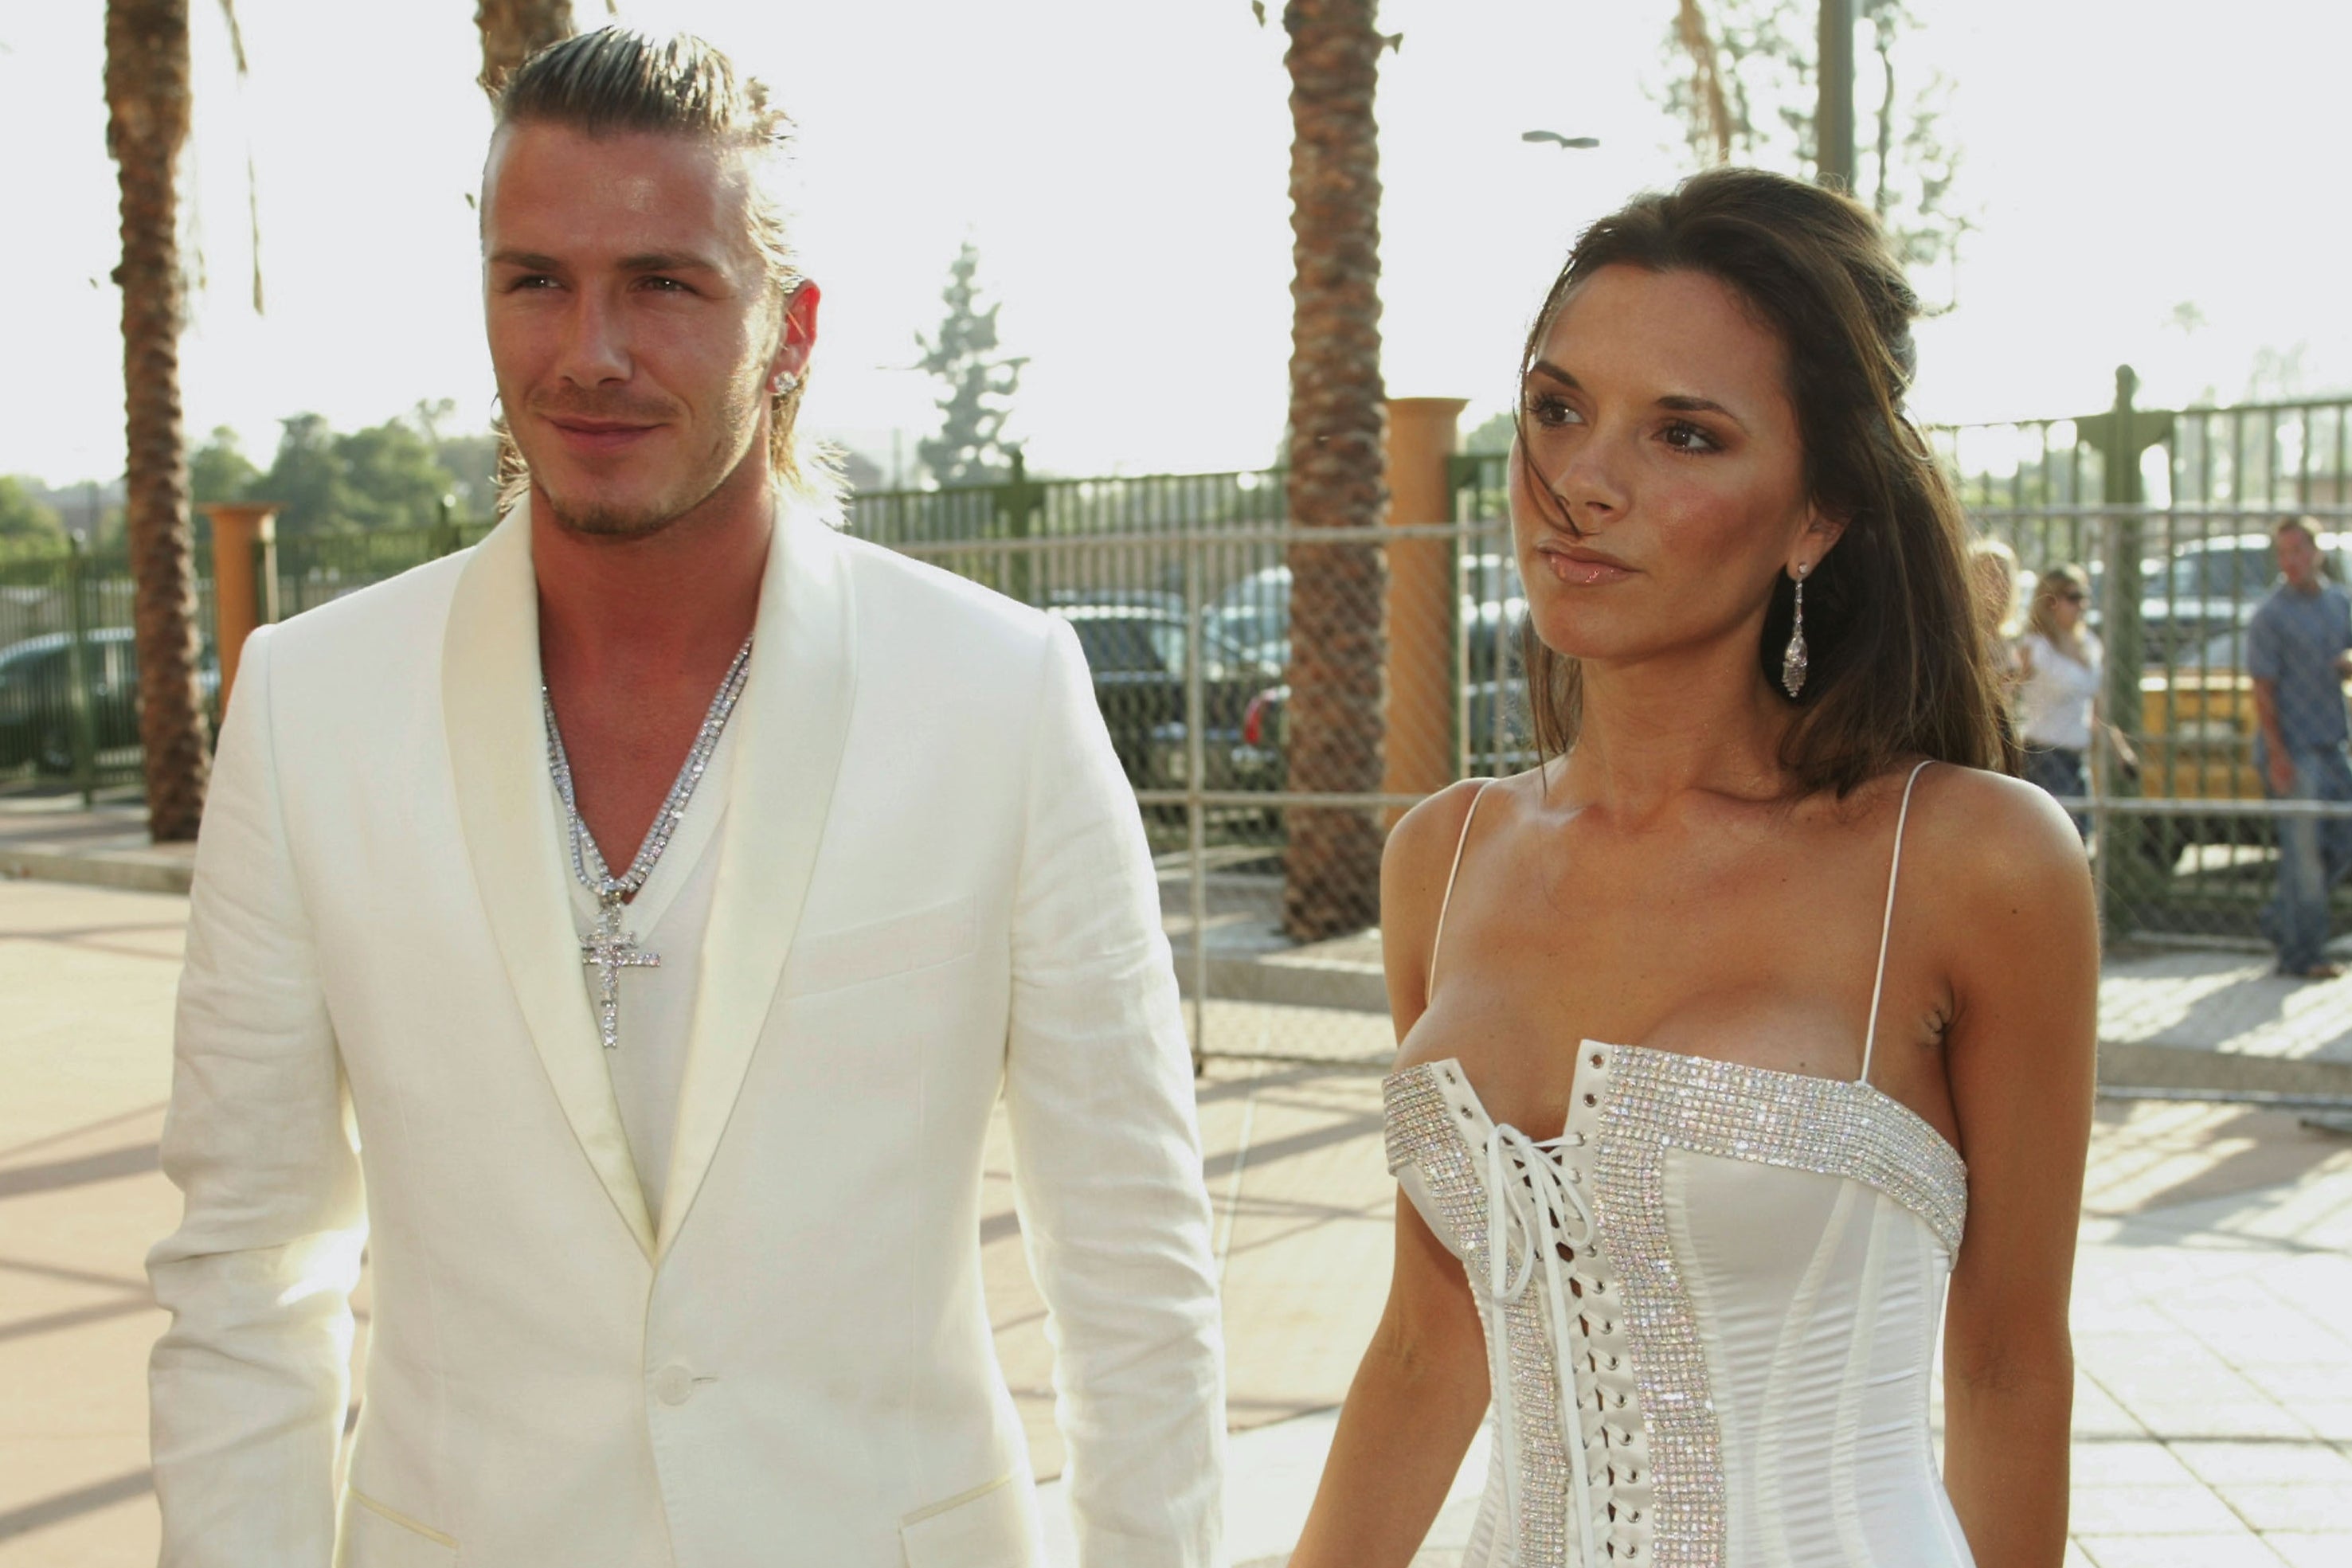 David and Victoria Beckham attend the 2003 MTV Movie Awards